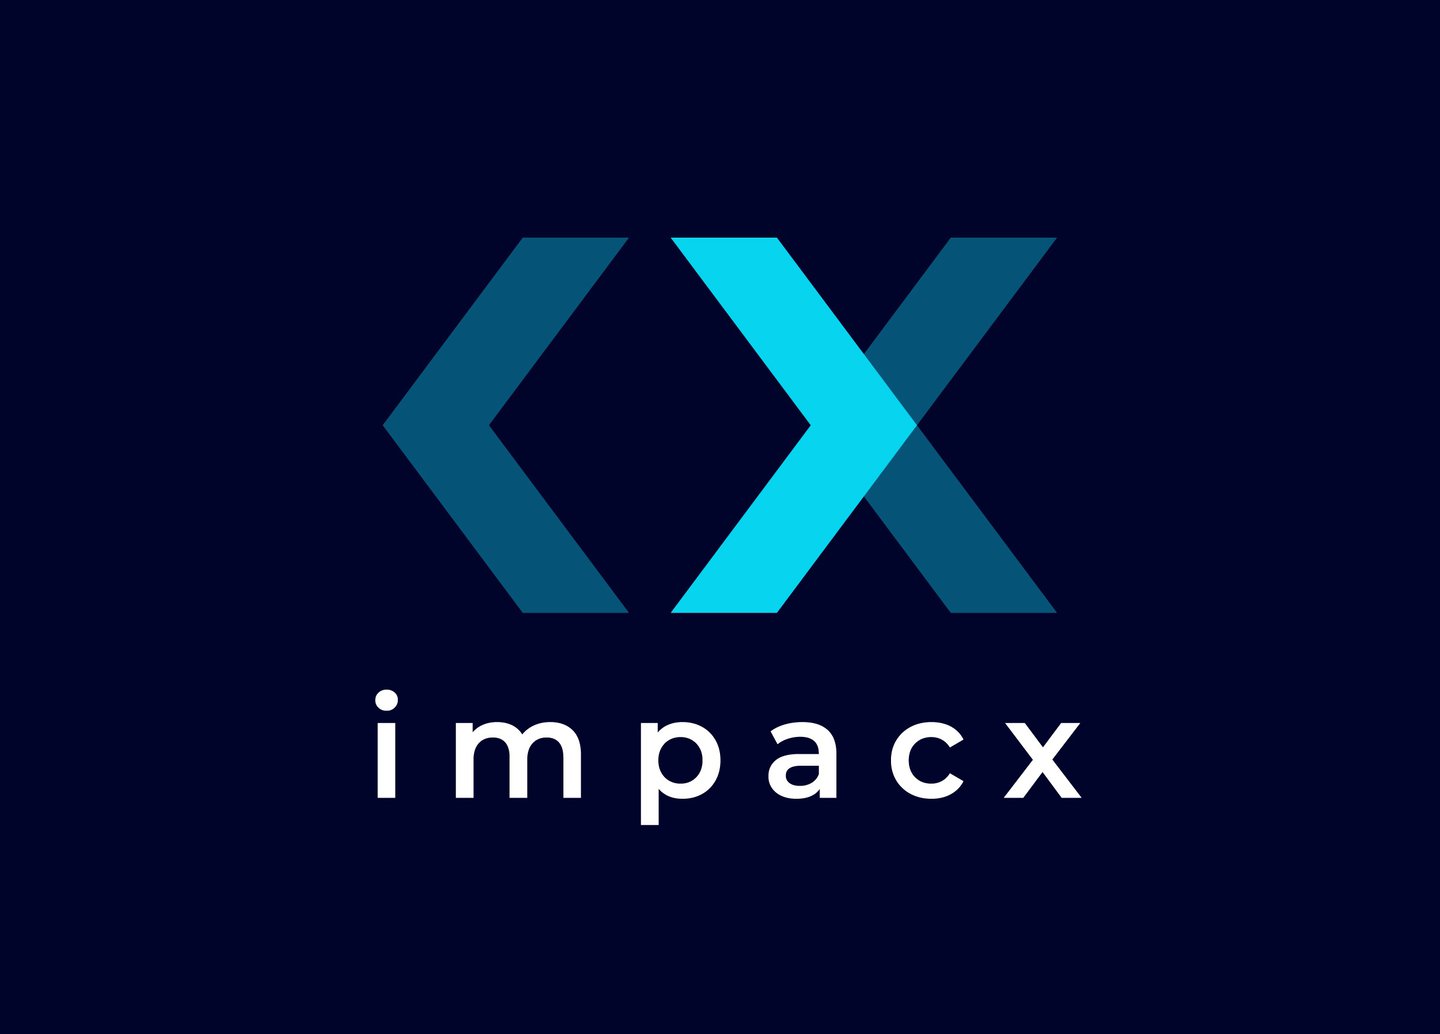 impacx services GmbH